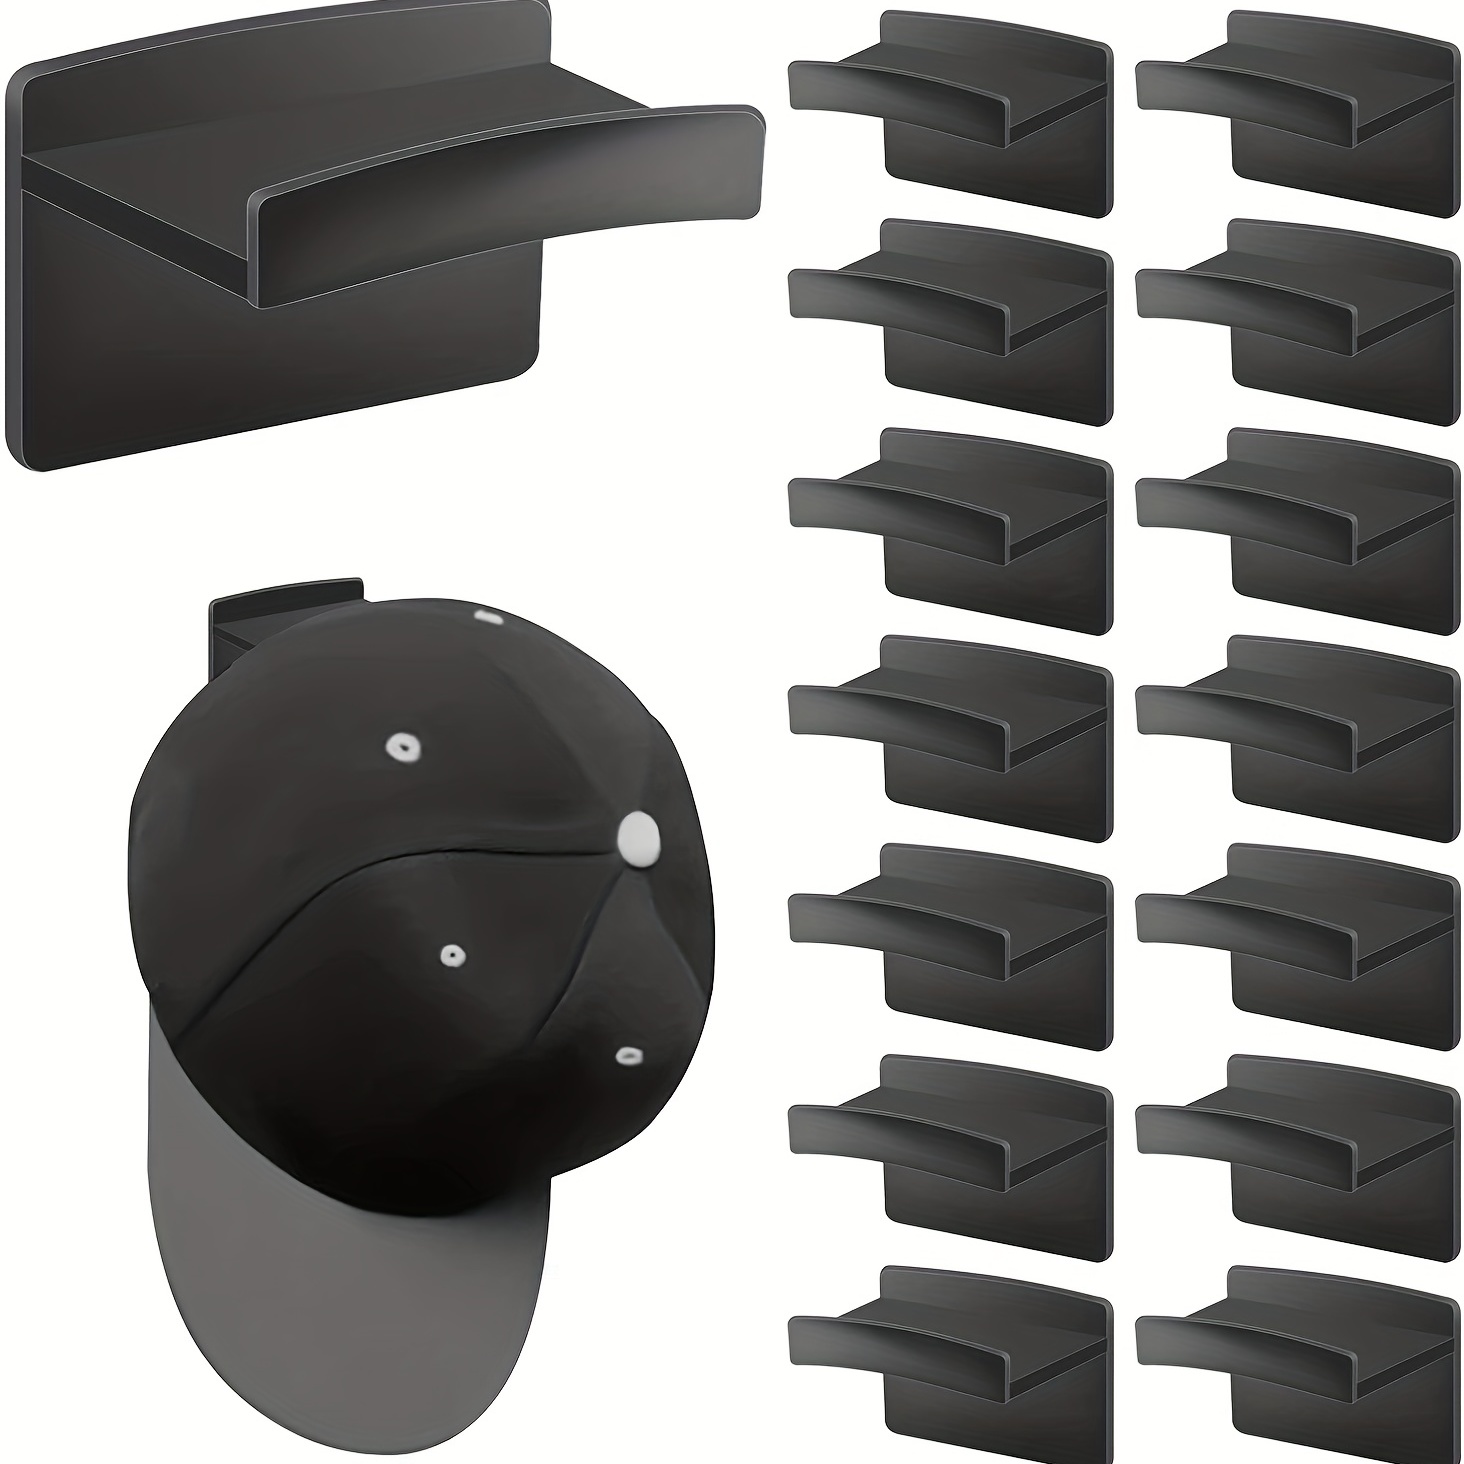 YYST Rolling Pin Holder Display Rack Storage - Black